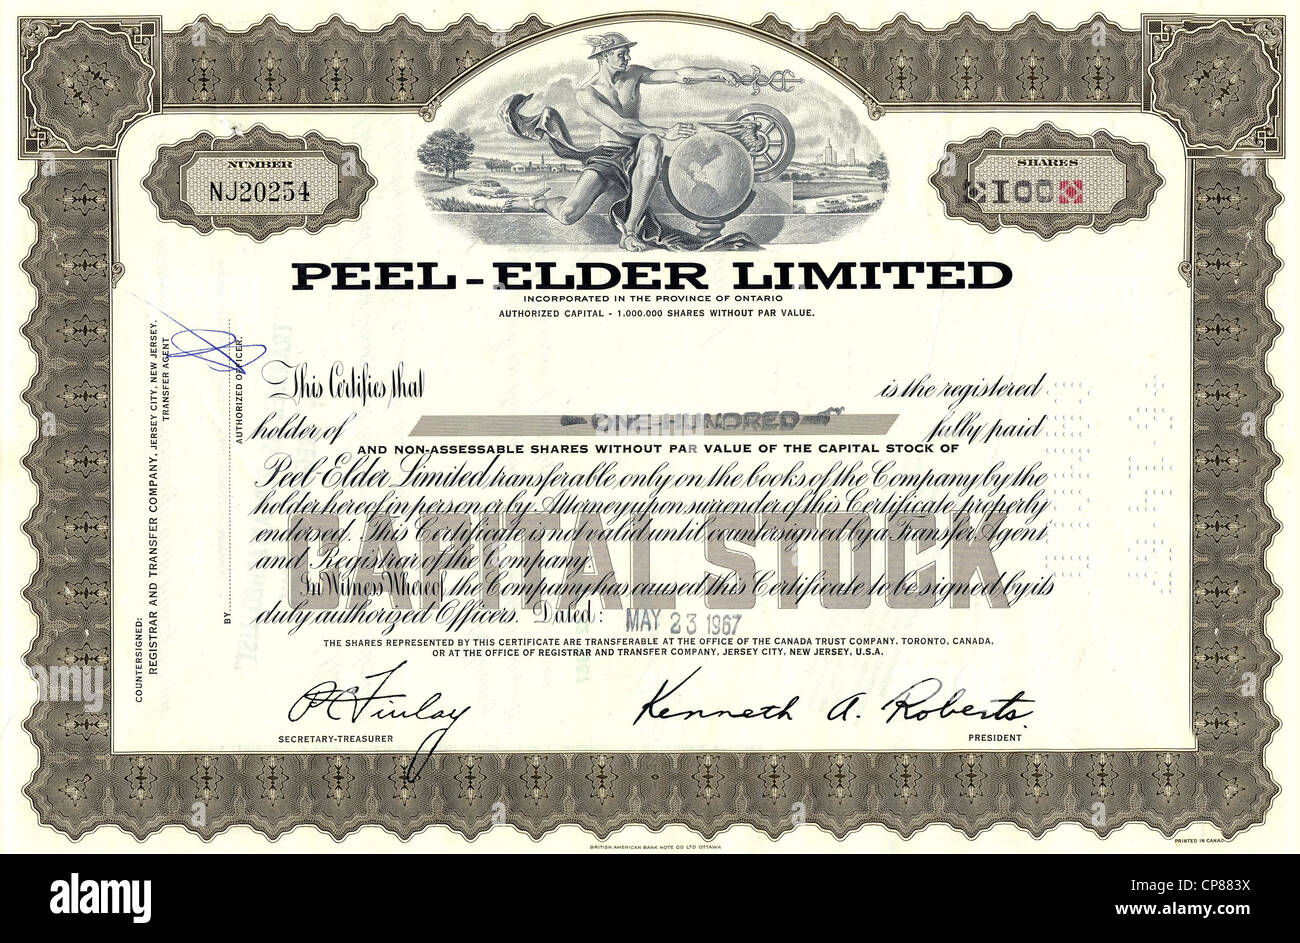 Historical stock certificate, mining company, real estate, Peel-Elder Limited, 1967, Peel Village Development in Brampton, Ontar Stock Photo